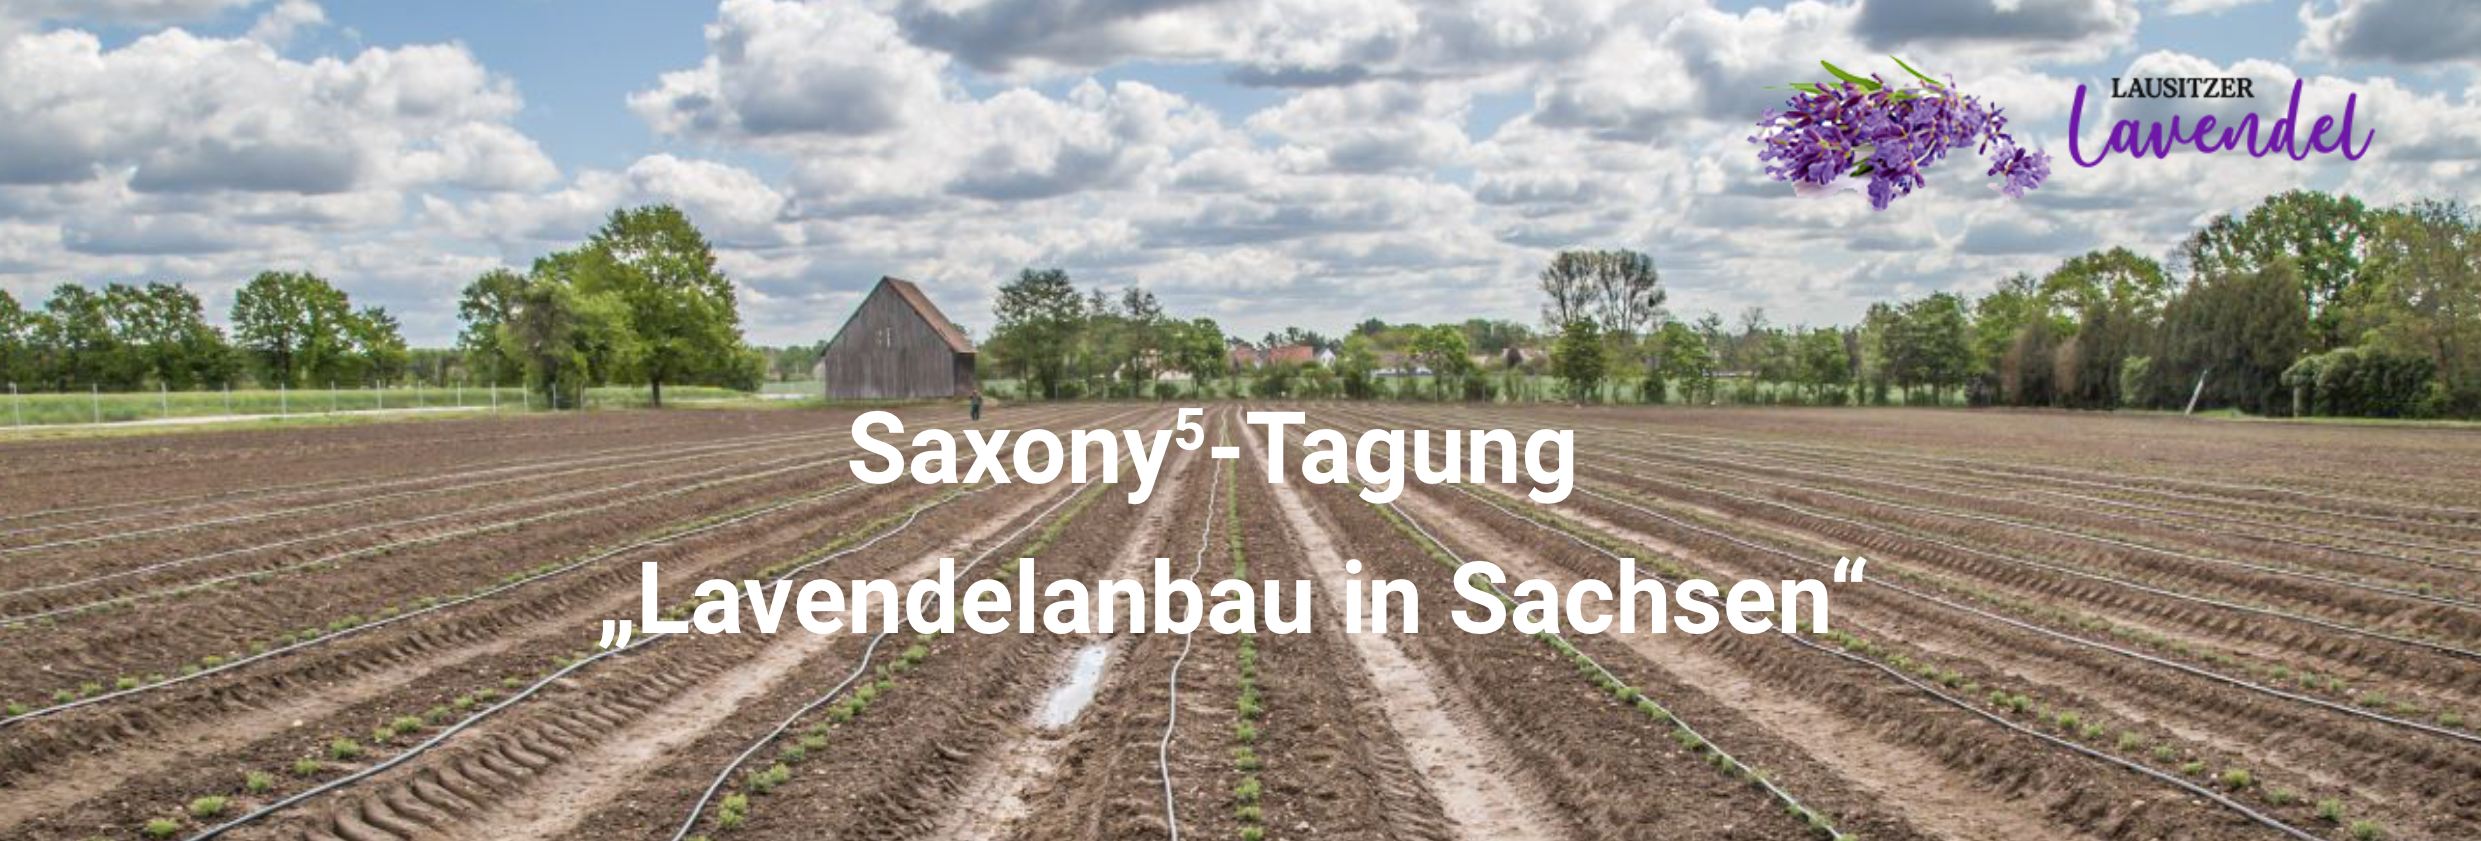 Saxony⁵-Tagung „Lavendelanbau in Sachsen“